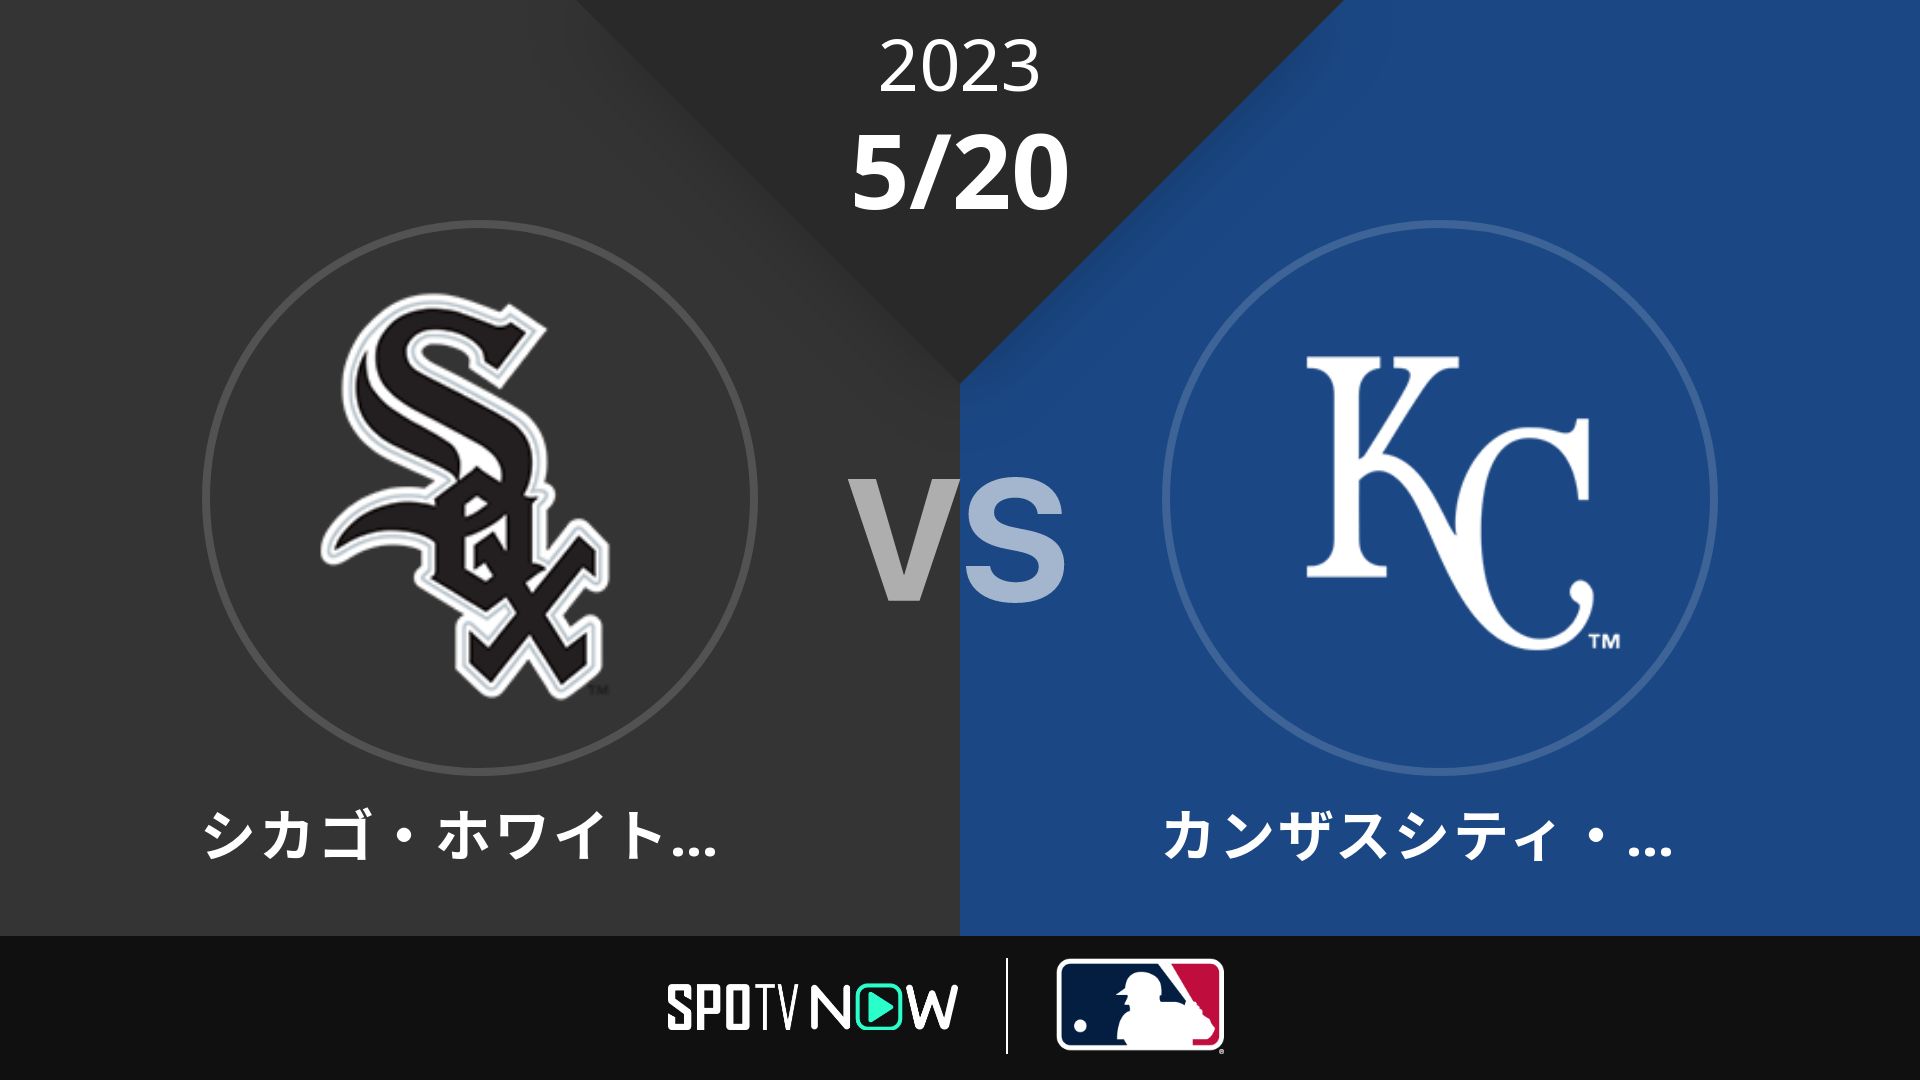 2023/5/20 Wソックス vs ロイヤルズ [MLB]